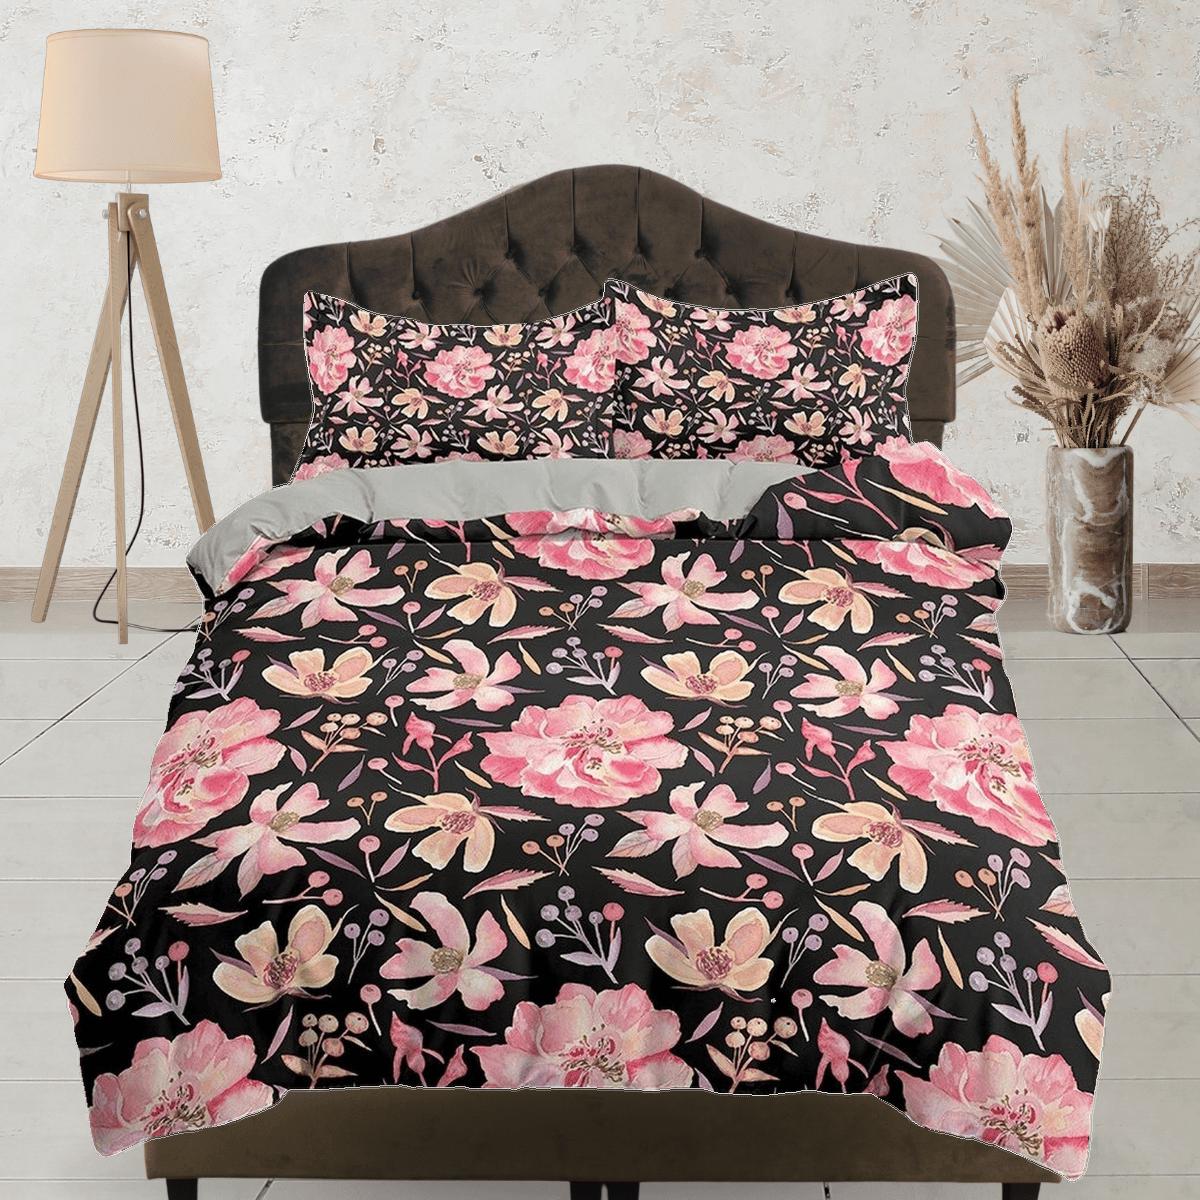 daintyduvet Pink floral retro duvet cover colorful bedding, teen girl bedroom, baby girl crib bedding boho maximalist bedspread aesthetic bedding